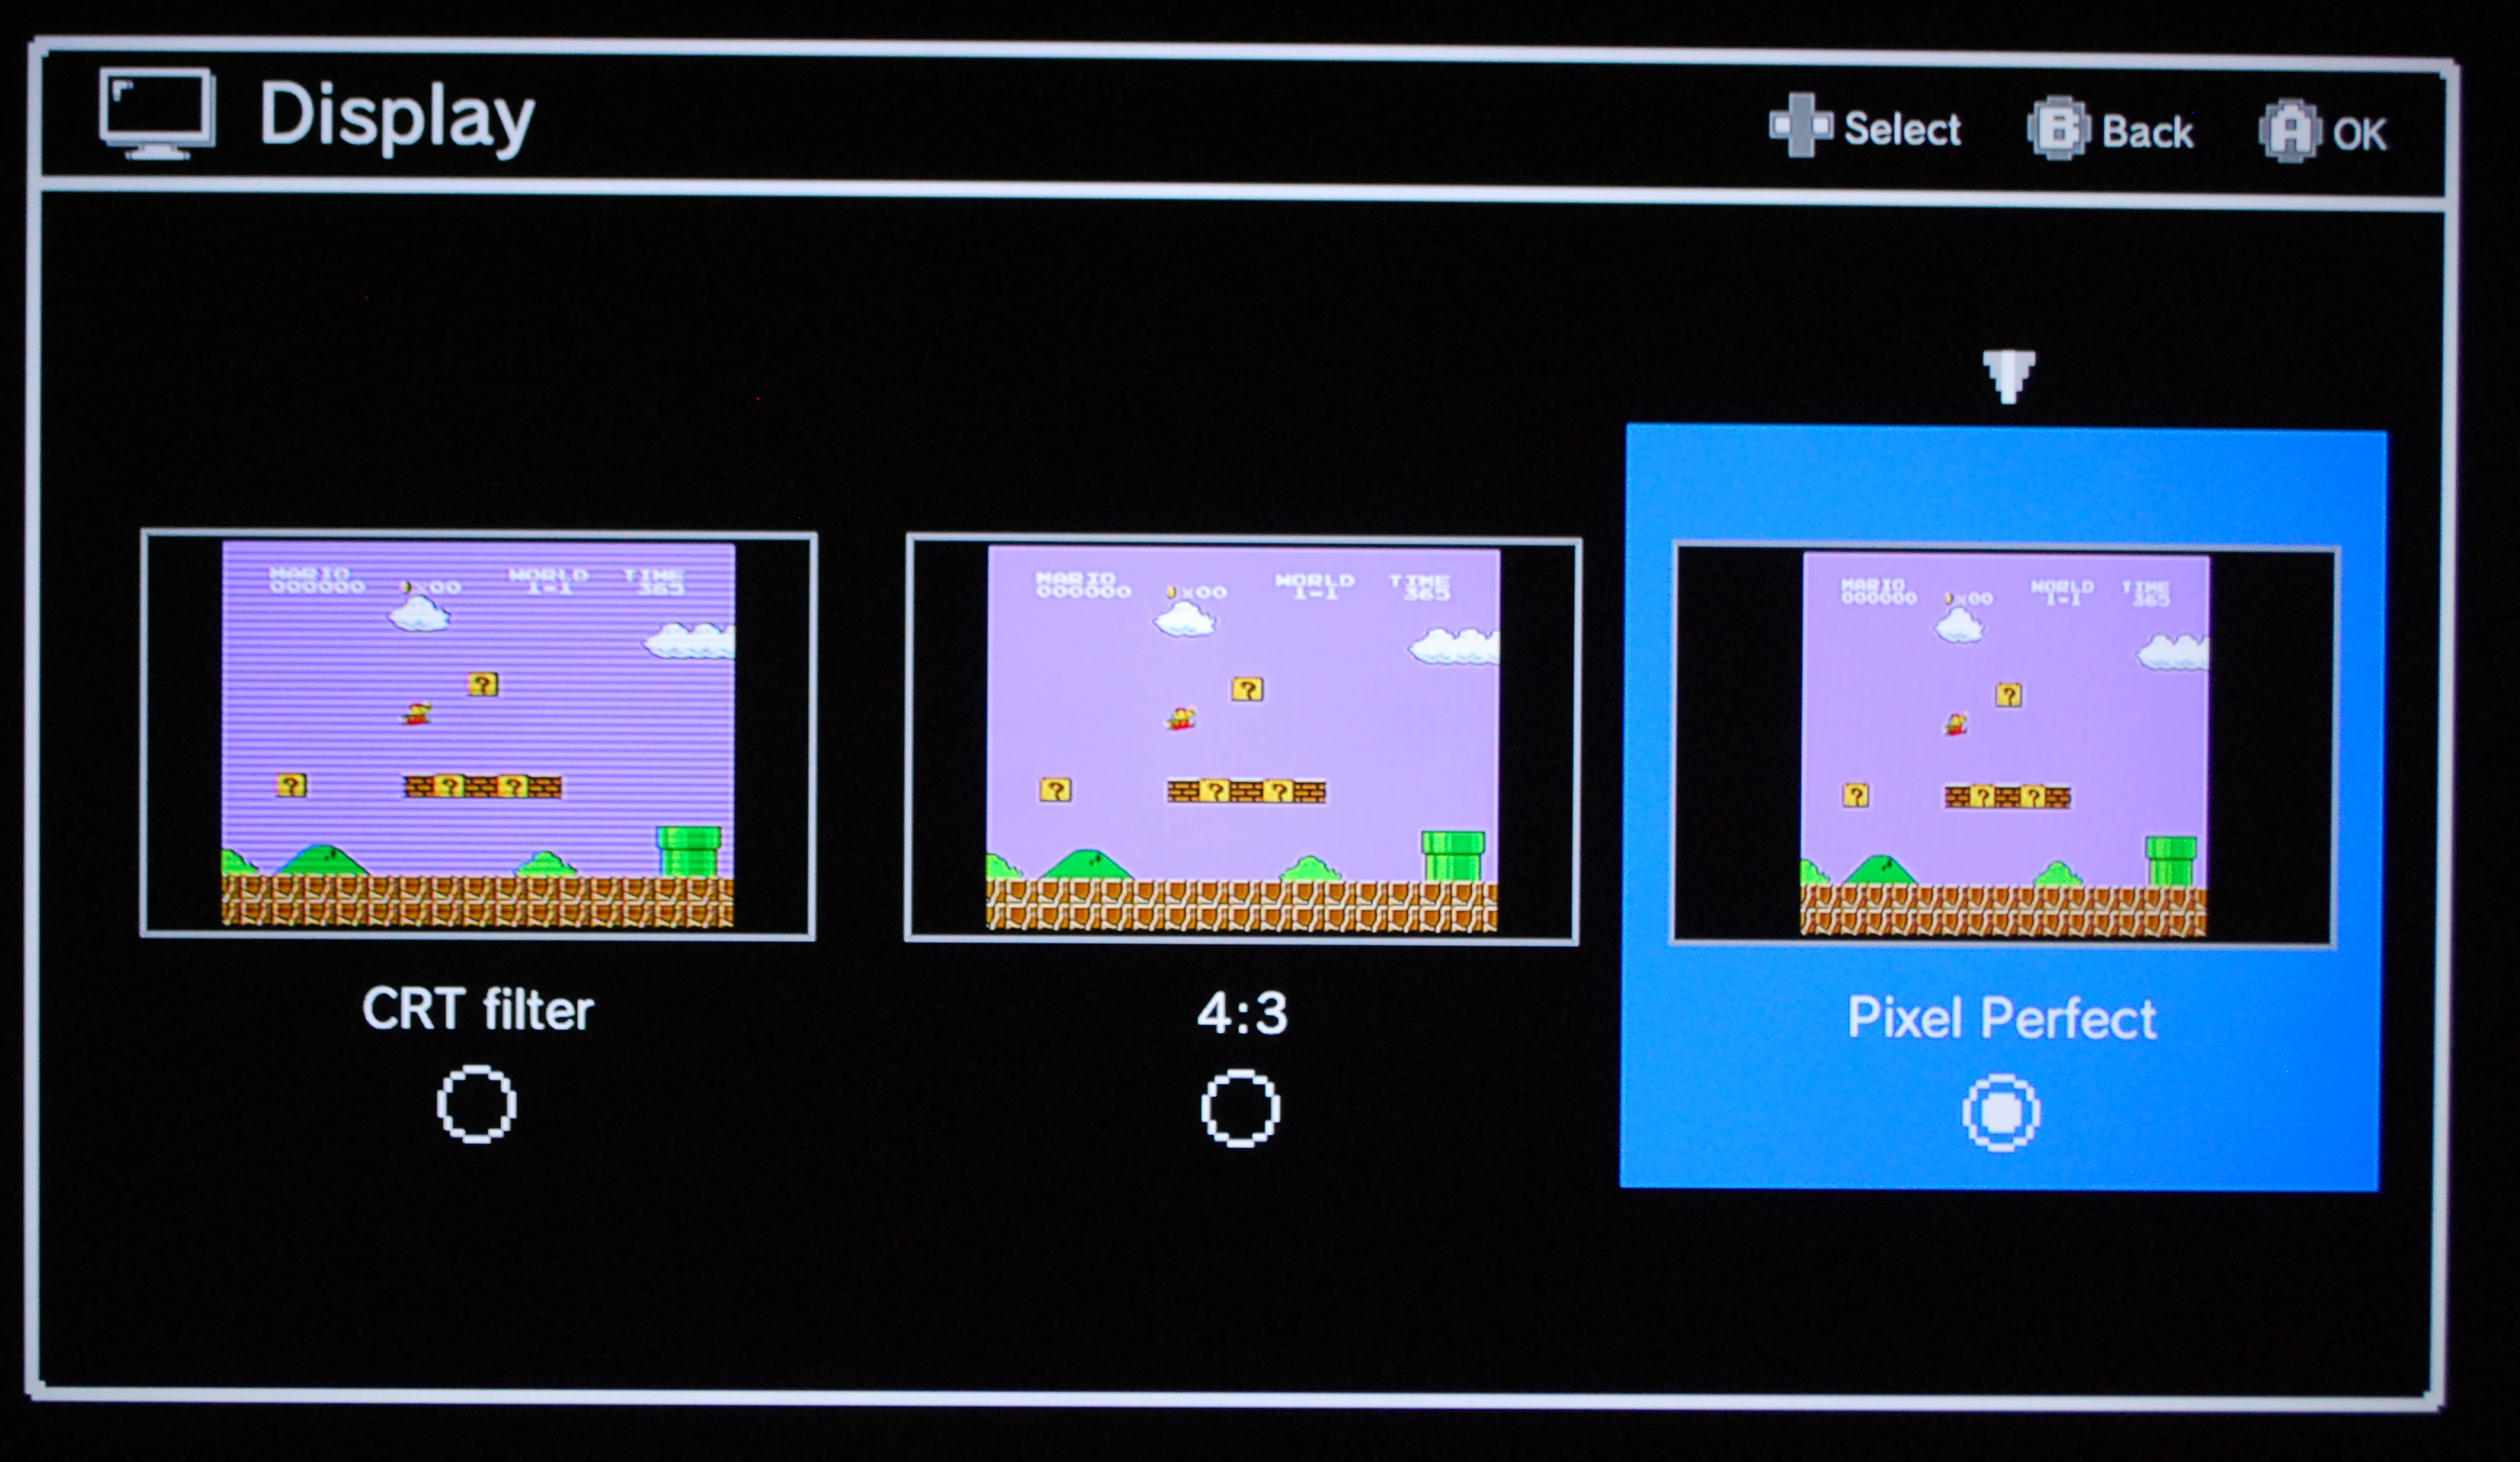 Nintendo Classic Mini Display options